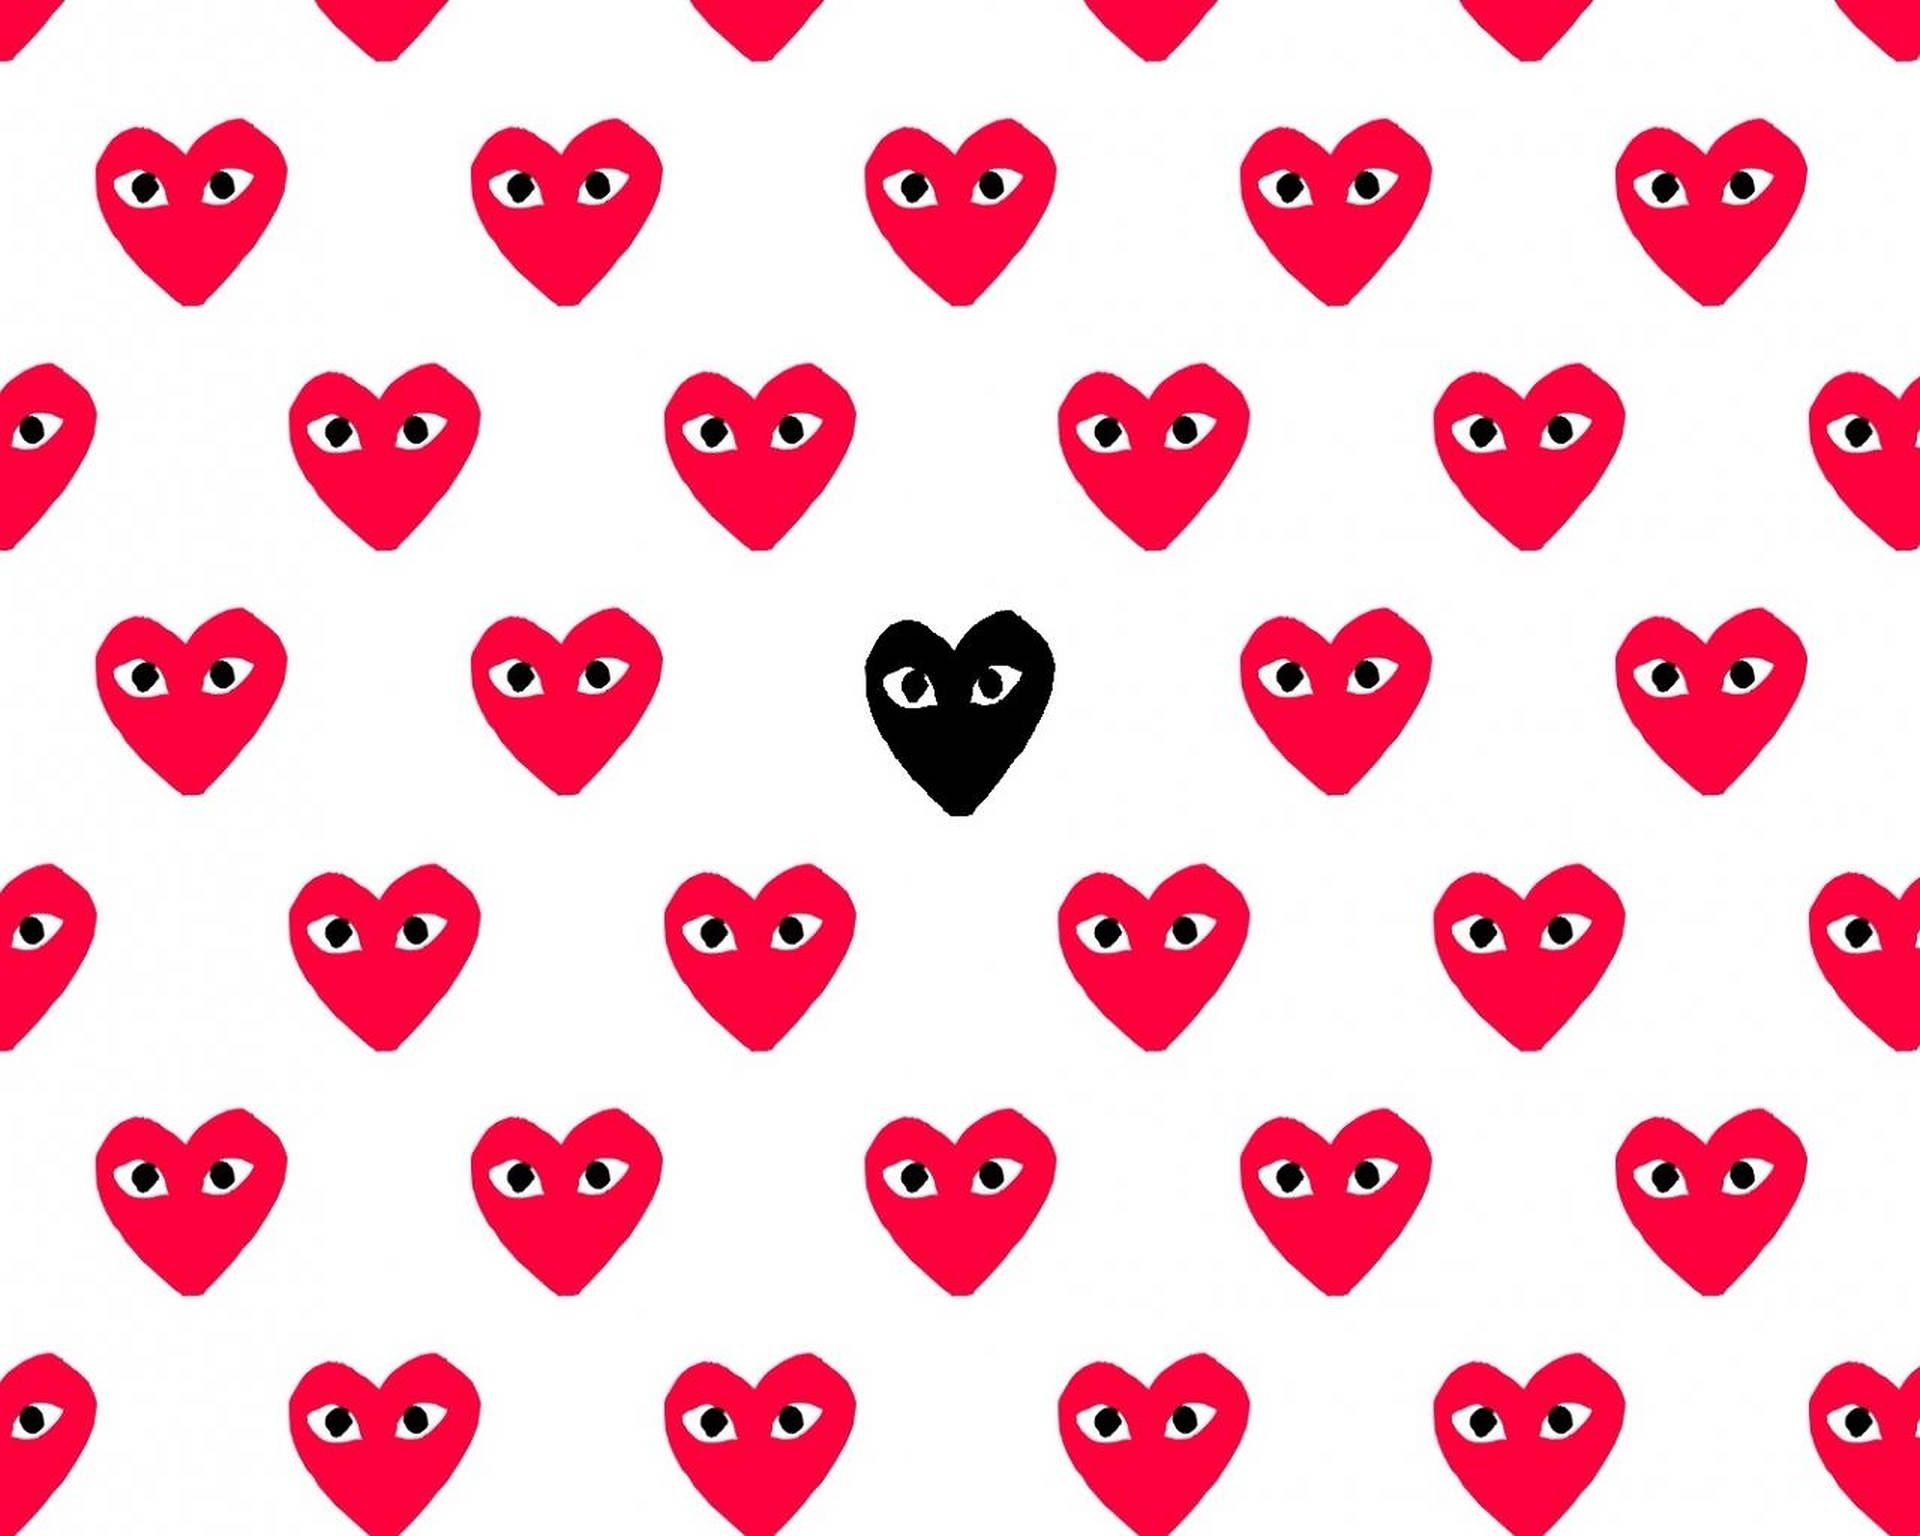 Red Heart Pattern of CDG Brand Wallpaper